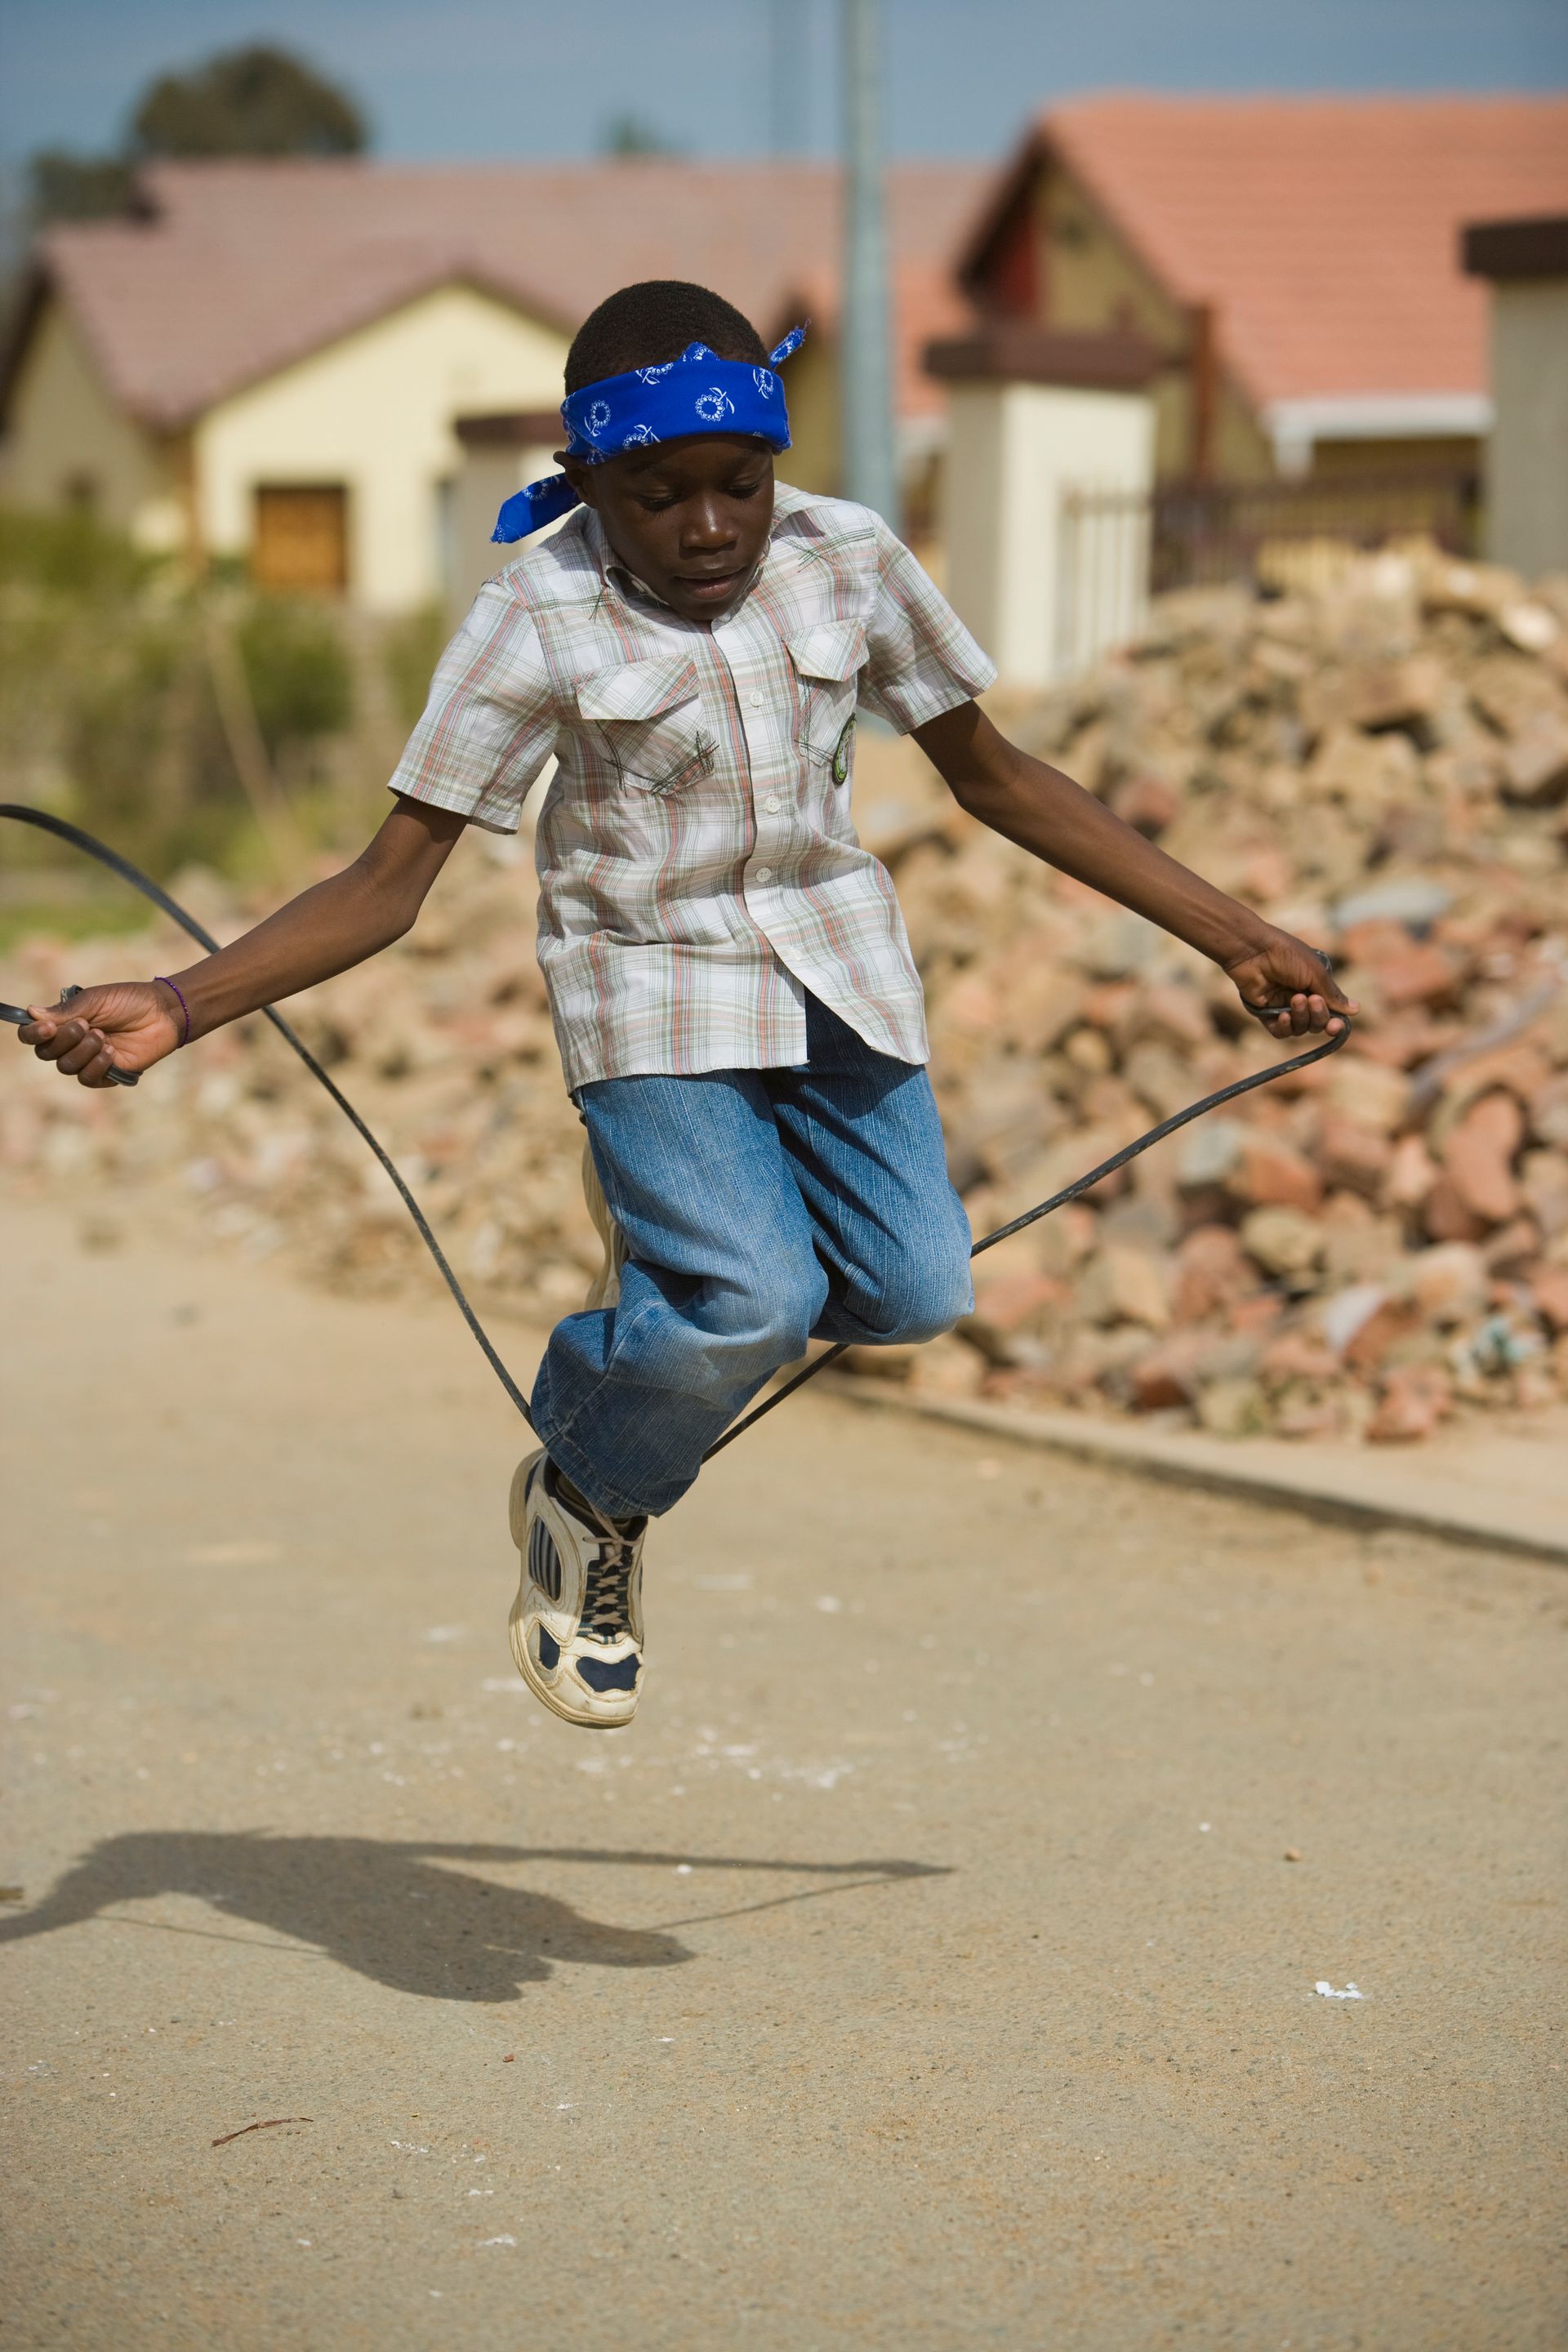 A boy plays jump rope.